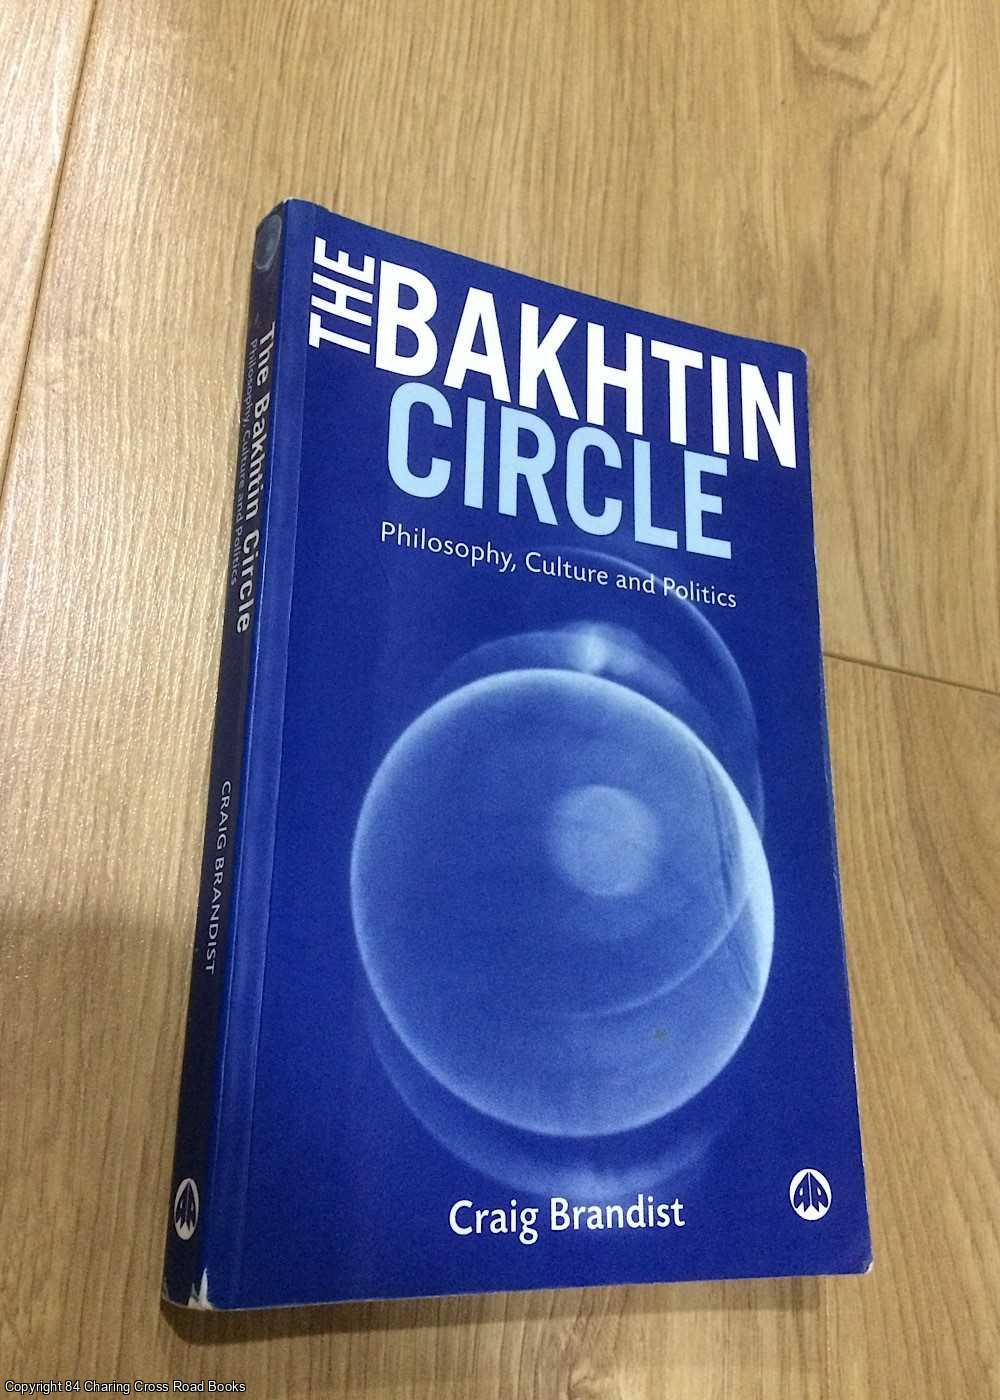 Brandist, Craig - The Bakhtin Circle